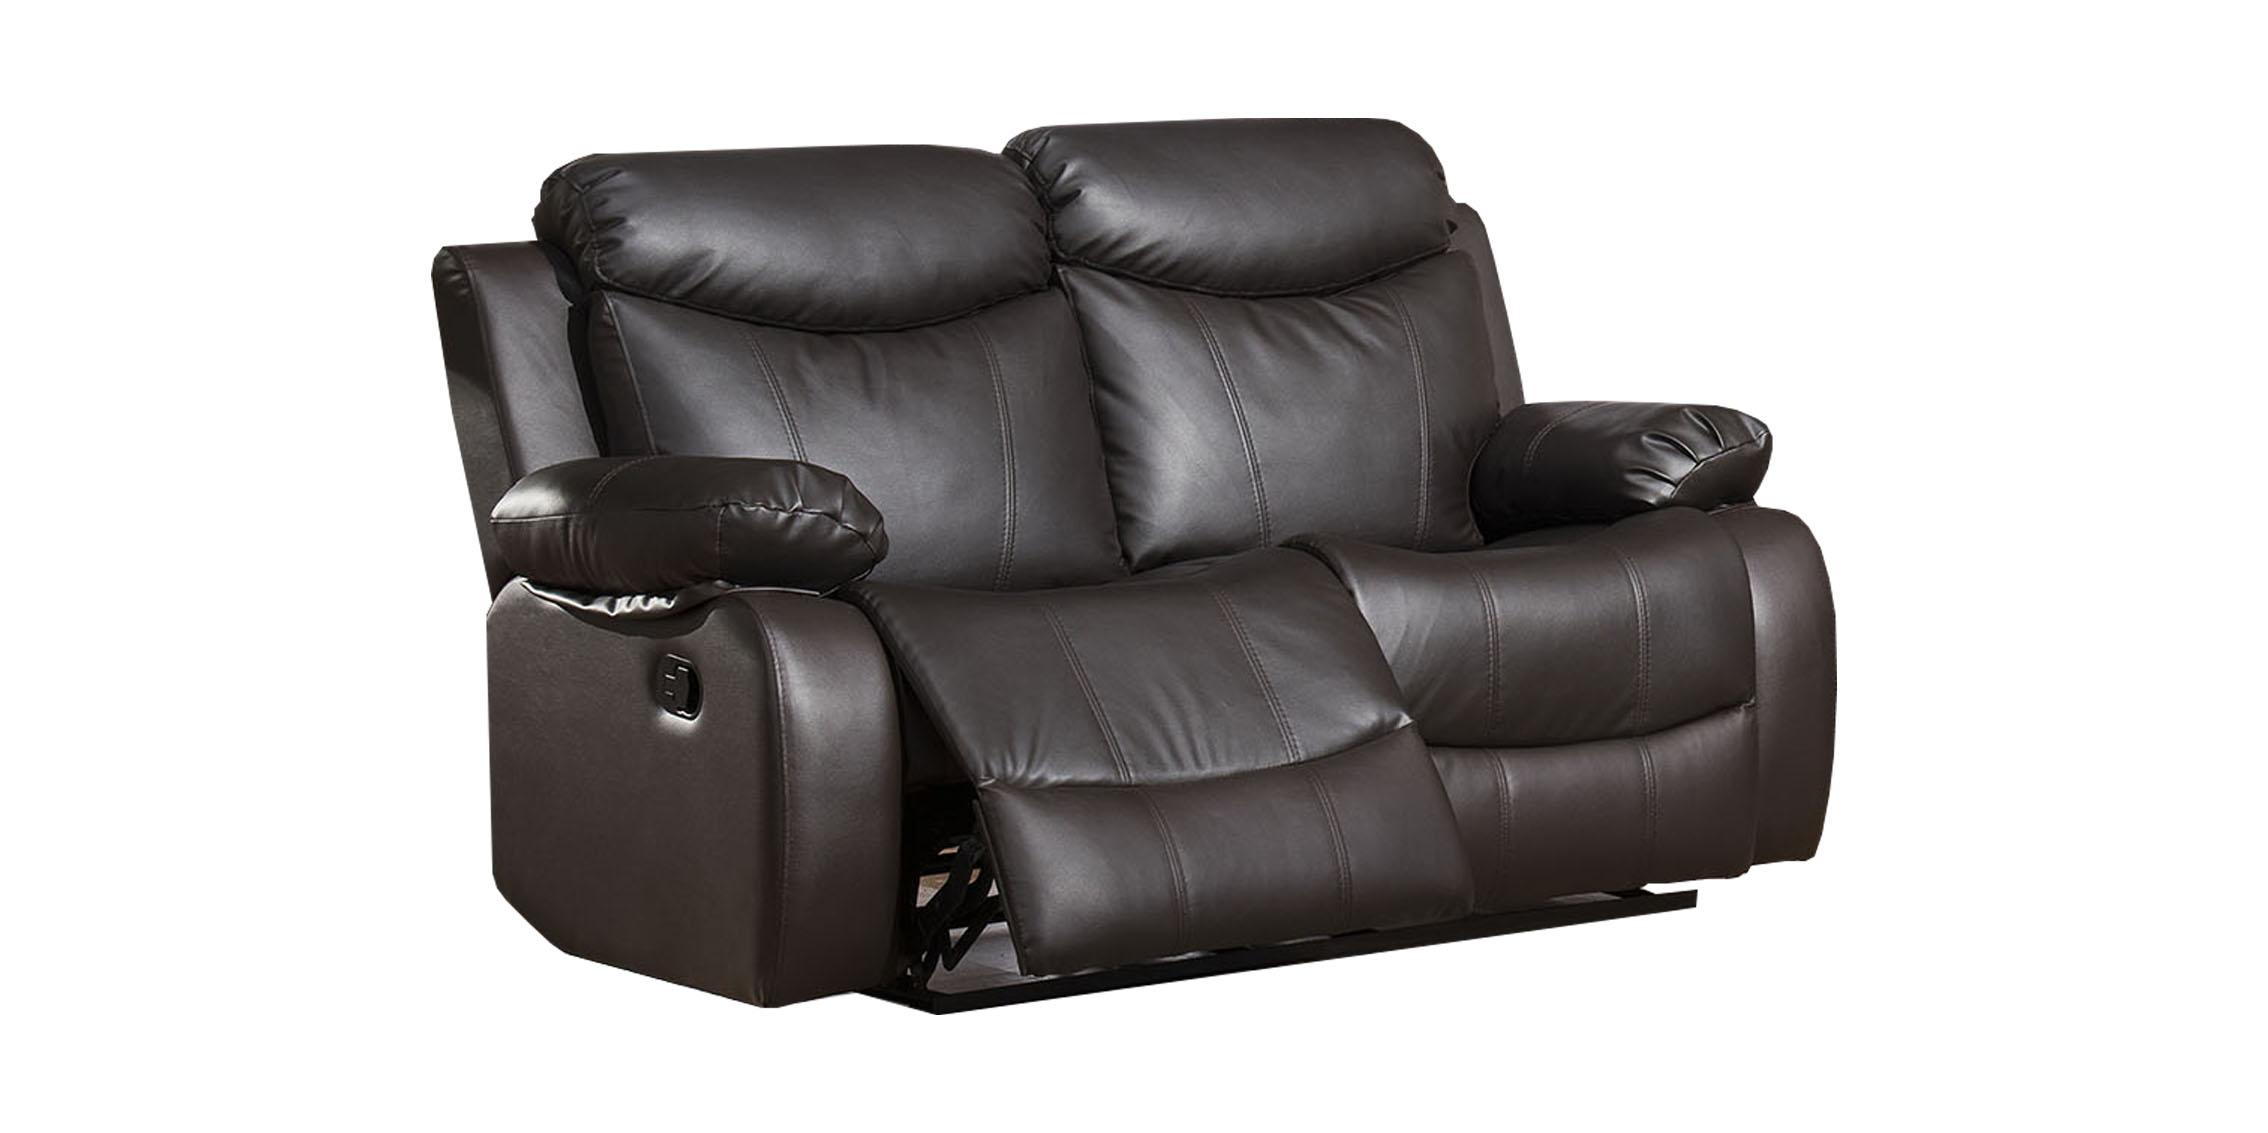 

    
McFerran SF3558 Contemporary Dark Brown PU Material Sofa Set w/ Dual Recliners 2Pcs
